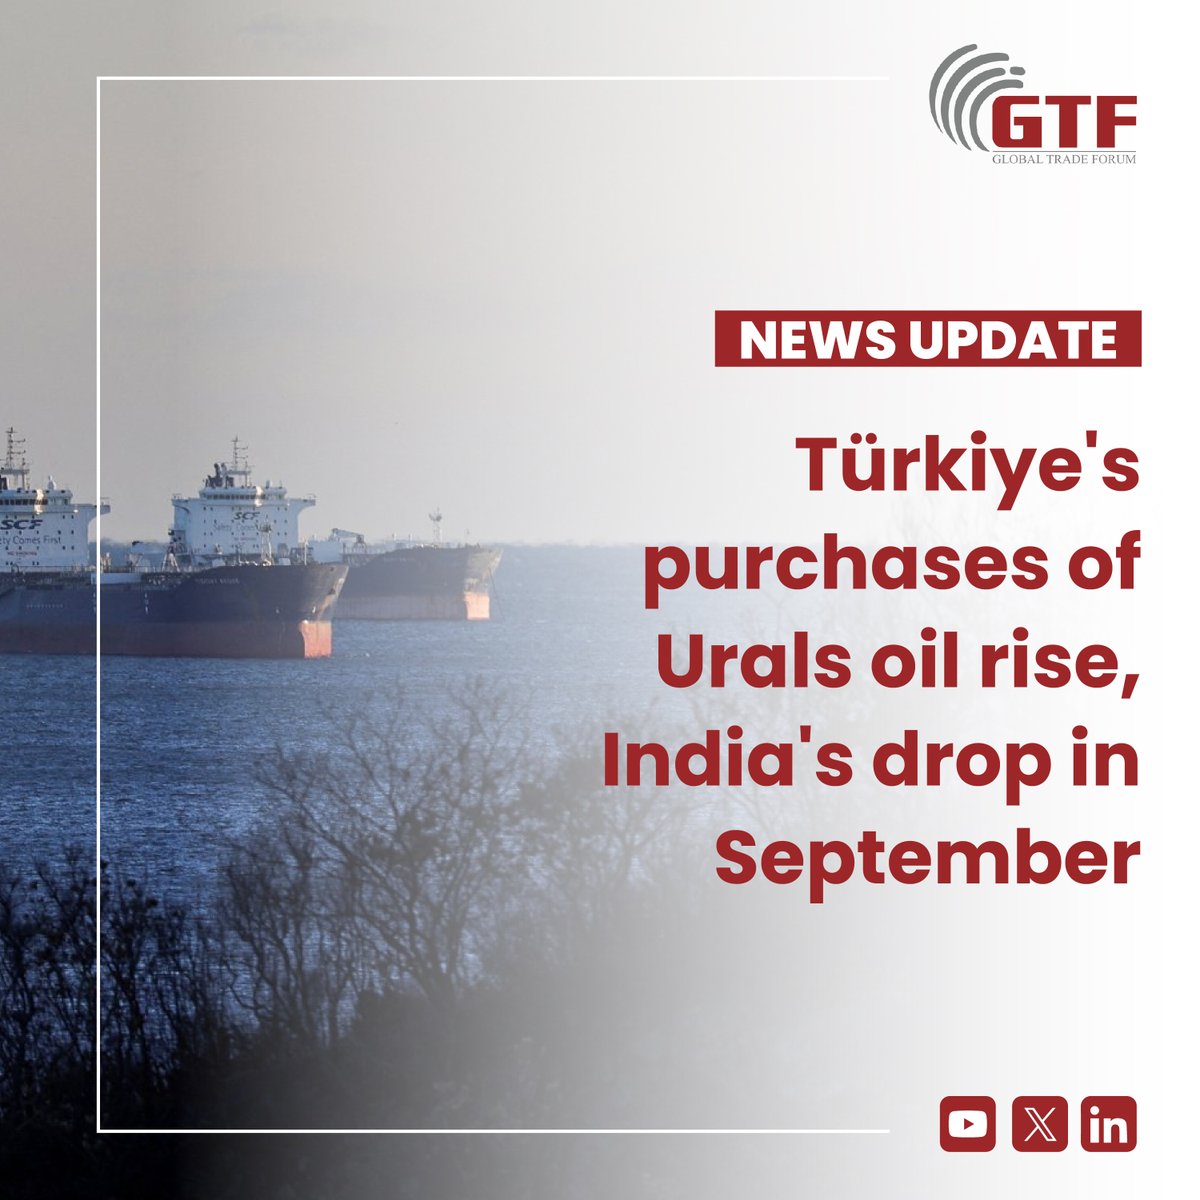 Türkiye's Purchases of Urals Oil Rise, India's Drop in September

For details: dailysabah.com/business/energ…

#Oil #Energy #Russia #Türkiye #India #CrudeOil #Urals #GlobalOilMarket #EnergySecurity #gtf #globaltradeforum